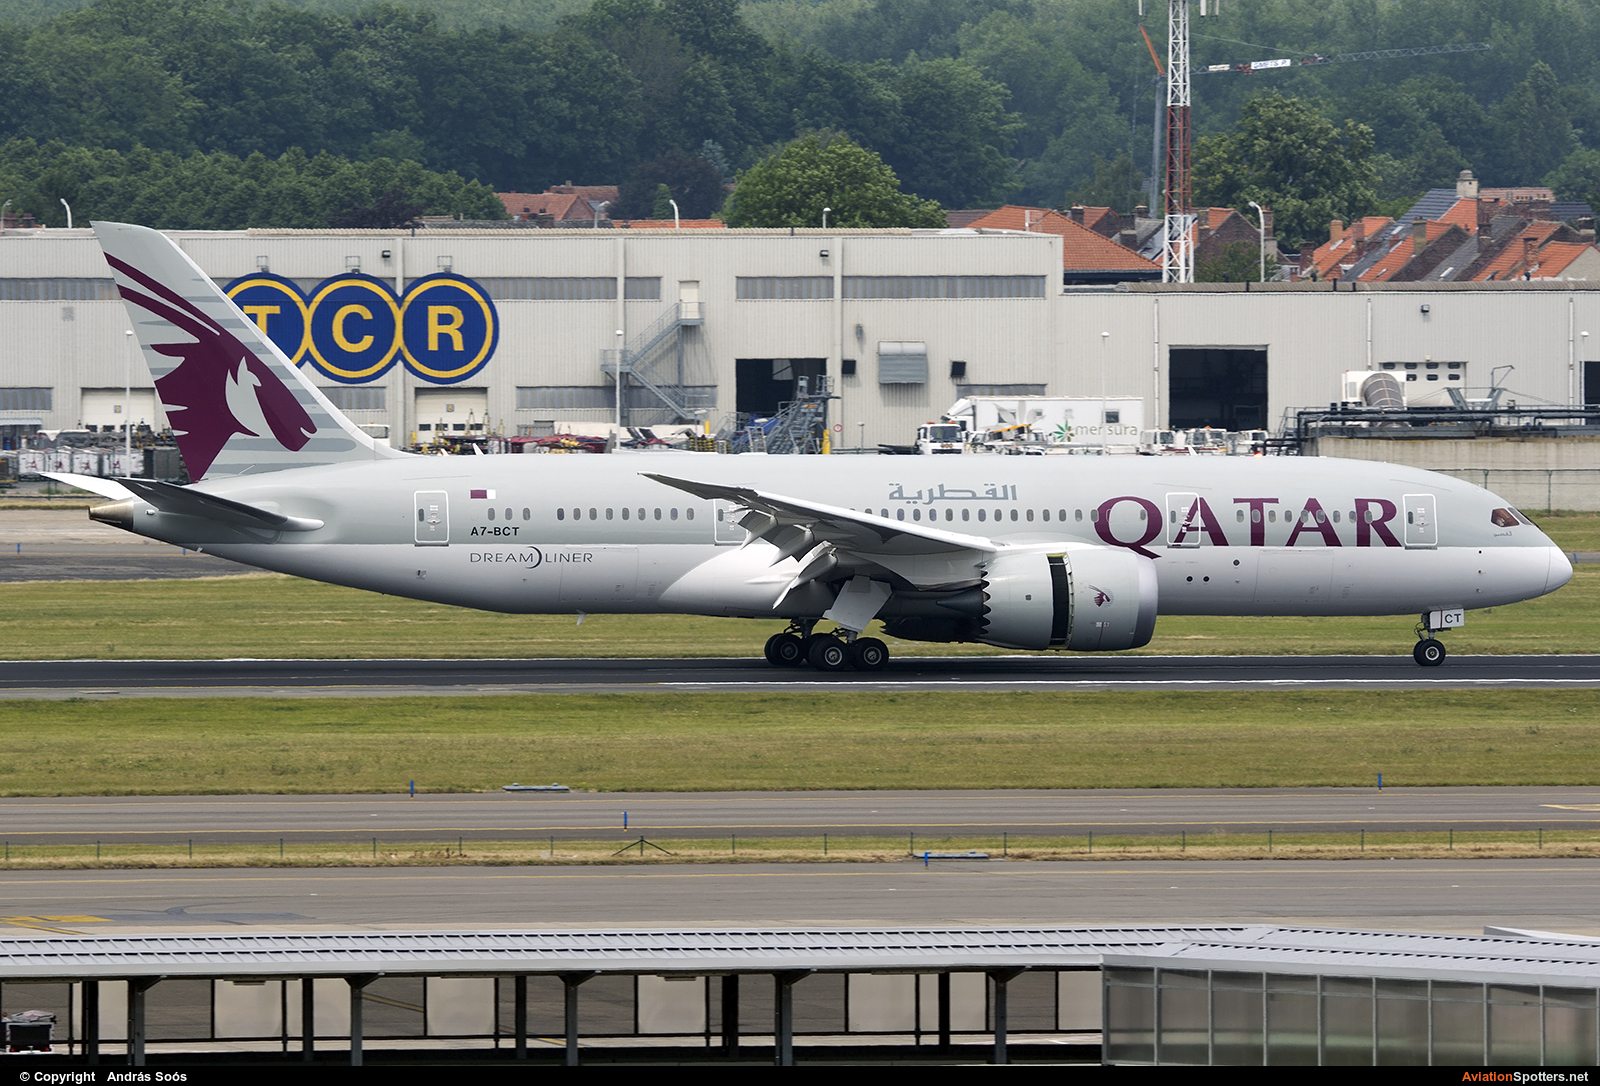 Qatar Airways  -  787-8 Dreamliner  (A7-BCT) By András Soós (sas1965)